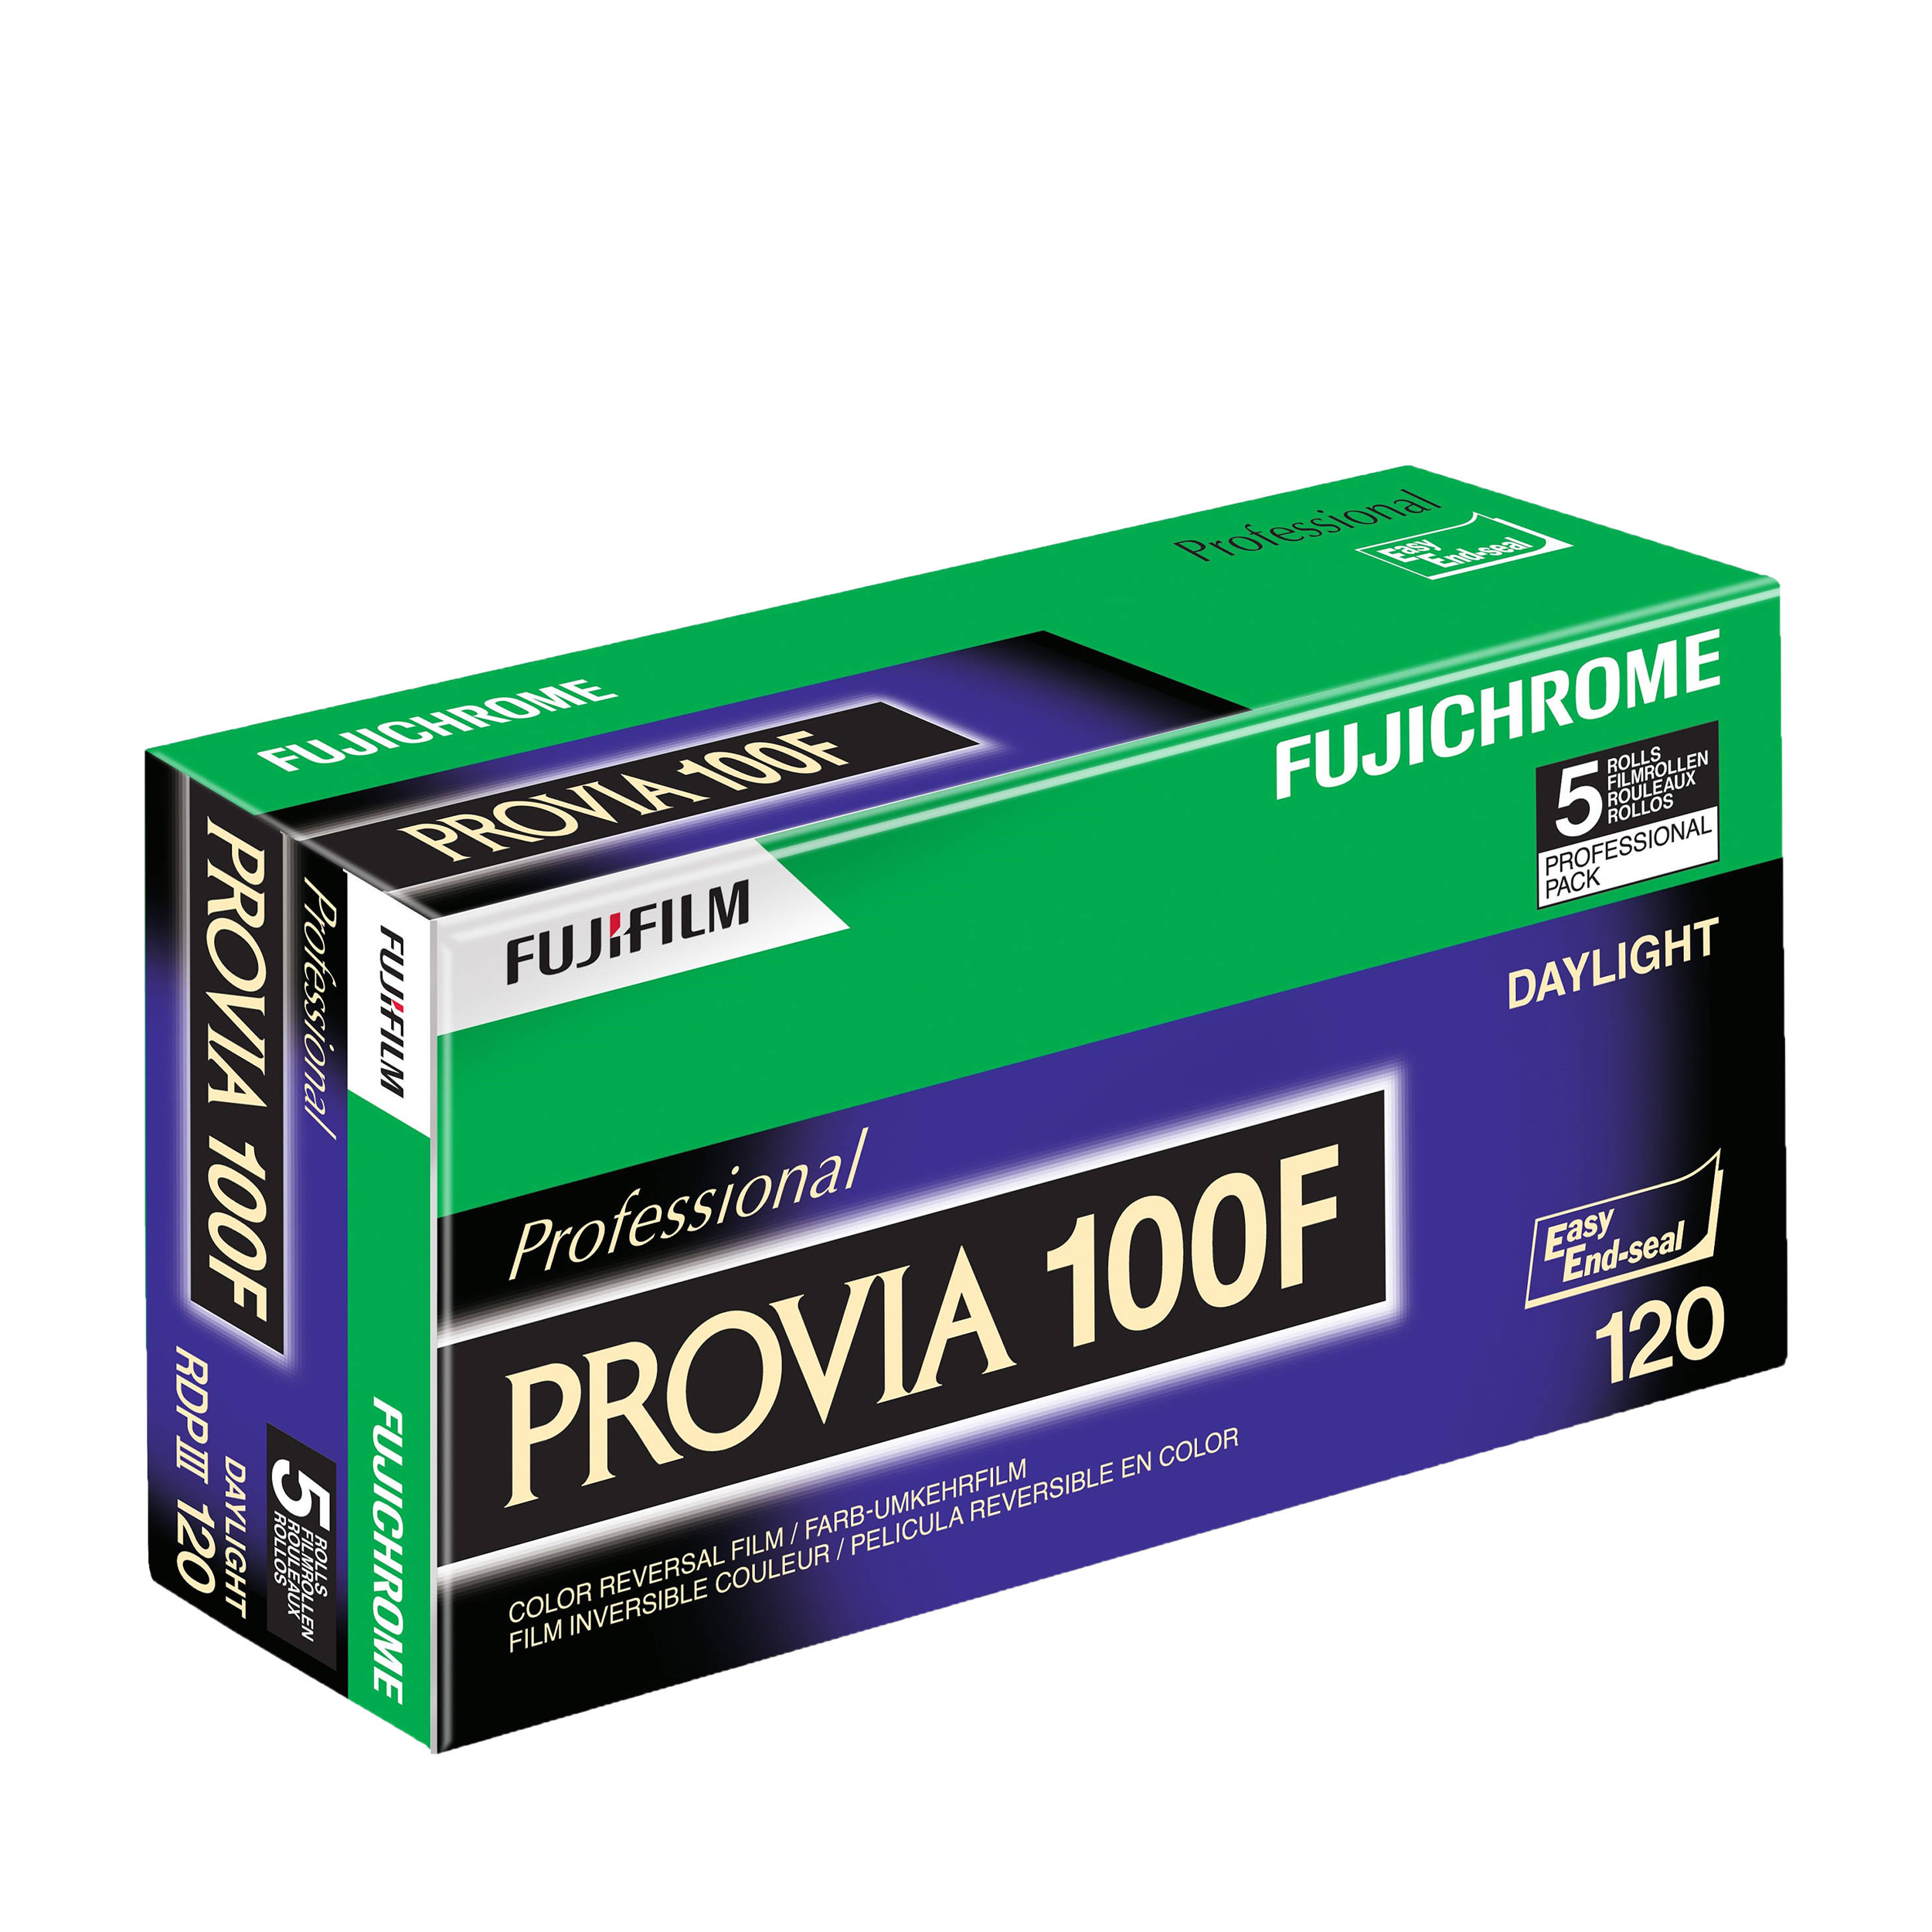 FUJIFILM Fujichrome Provia 100F Professional RDP-III Color Transparency Film - 120 Roll Film - 5 Pack